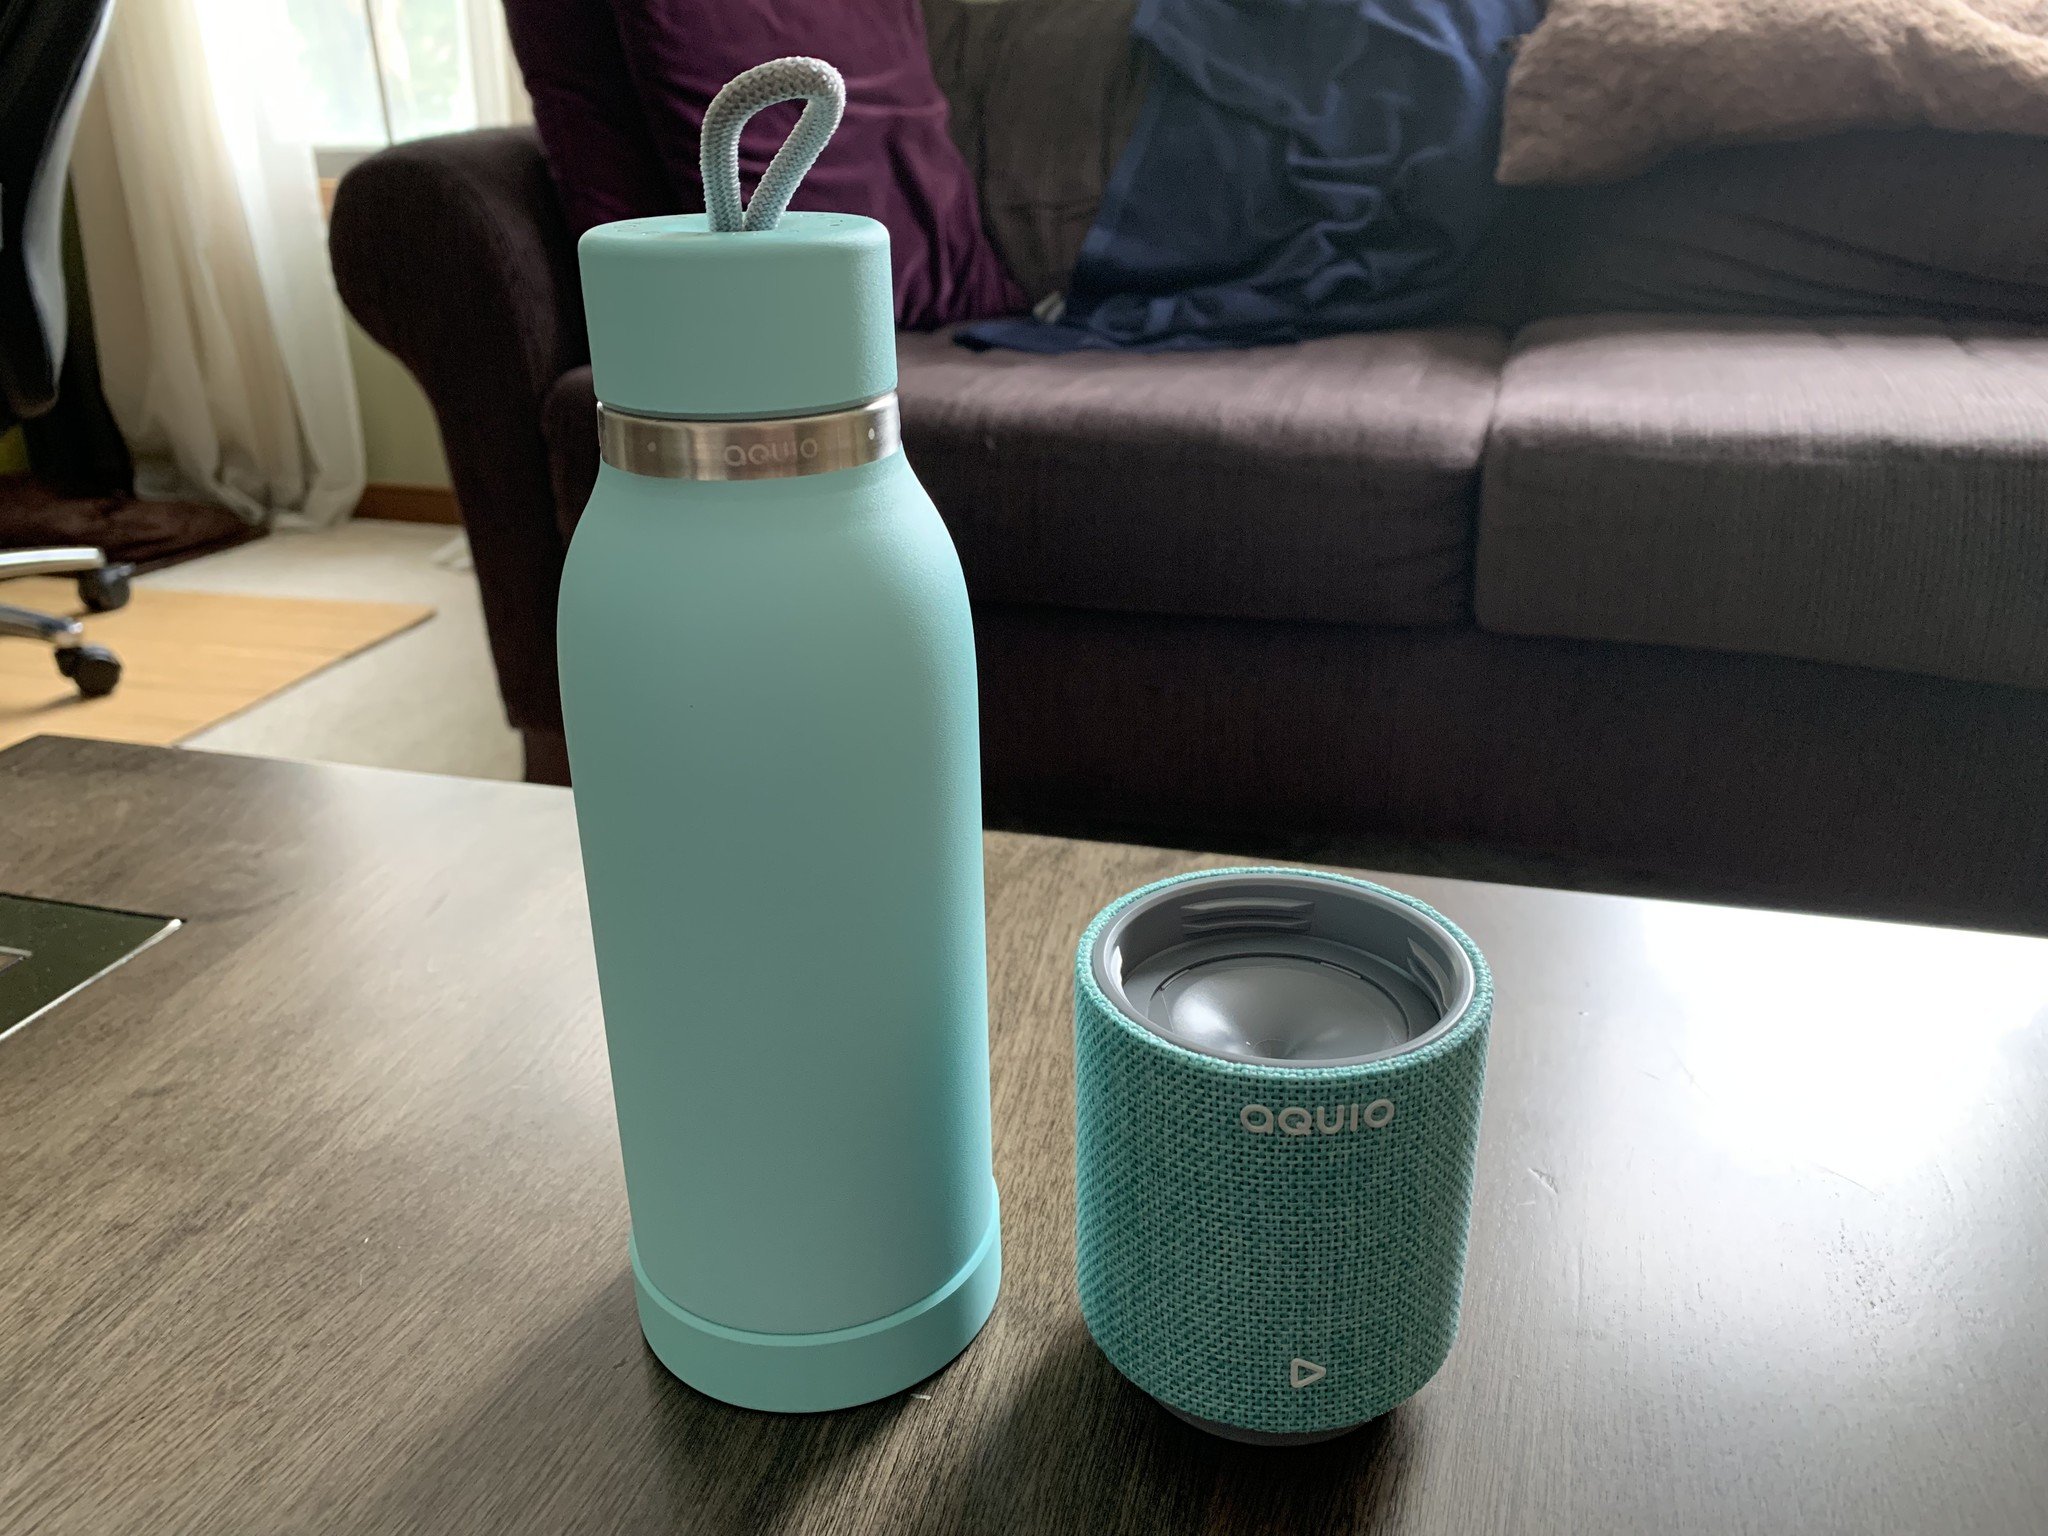 aquio bluetooth water bottle speaker